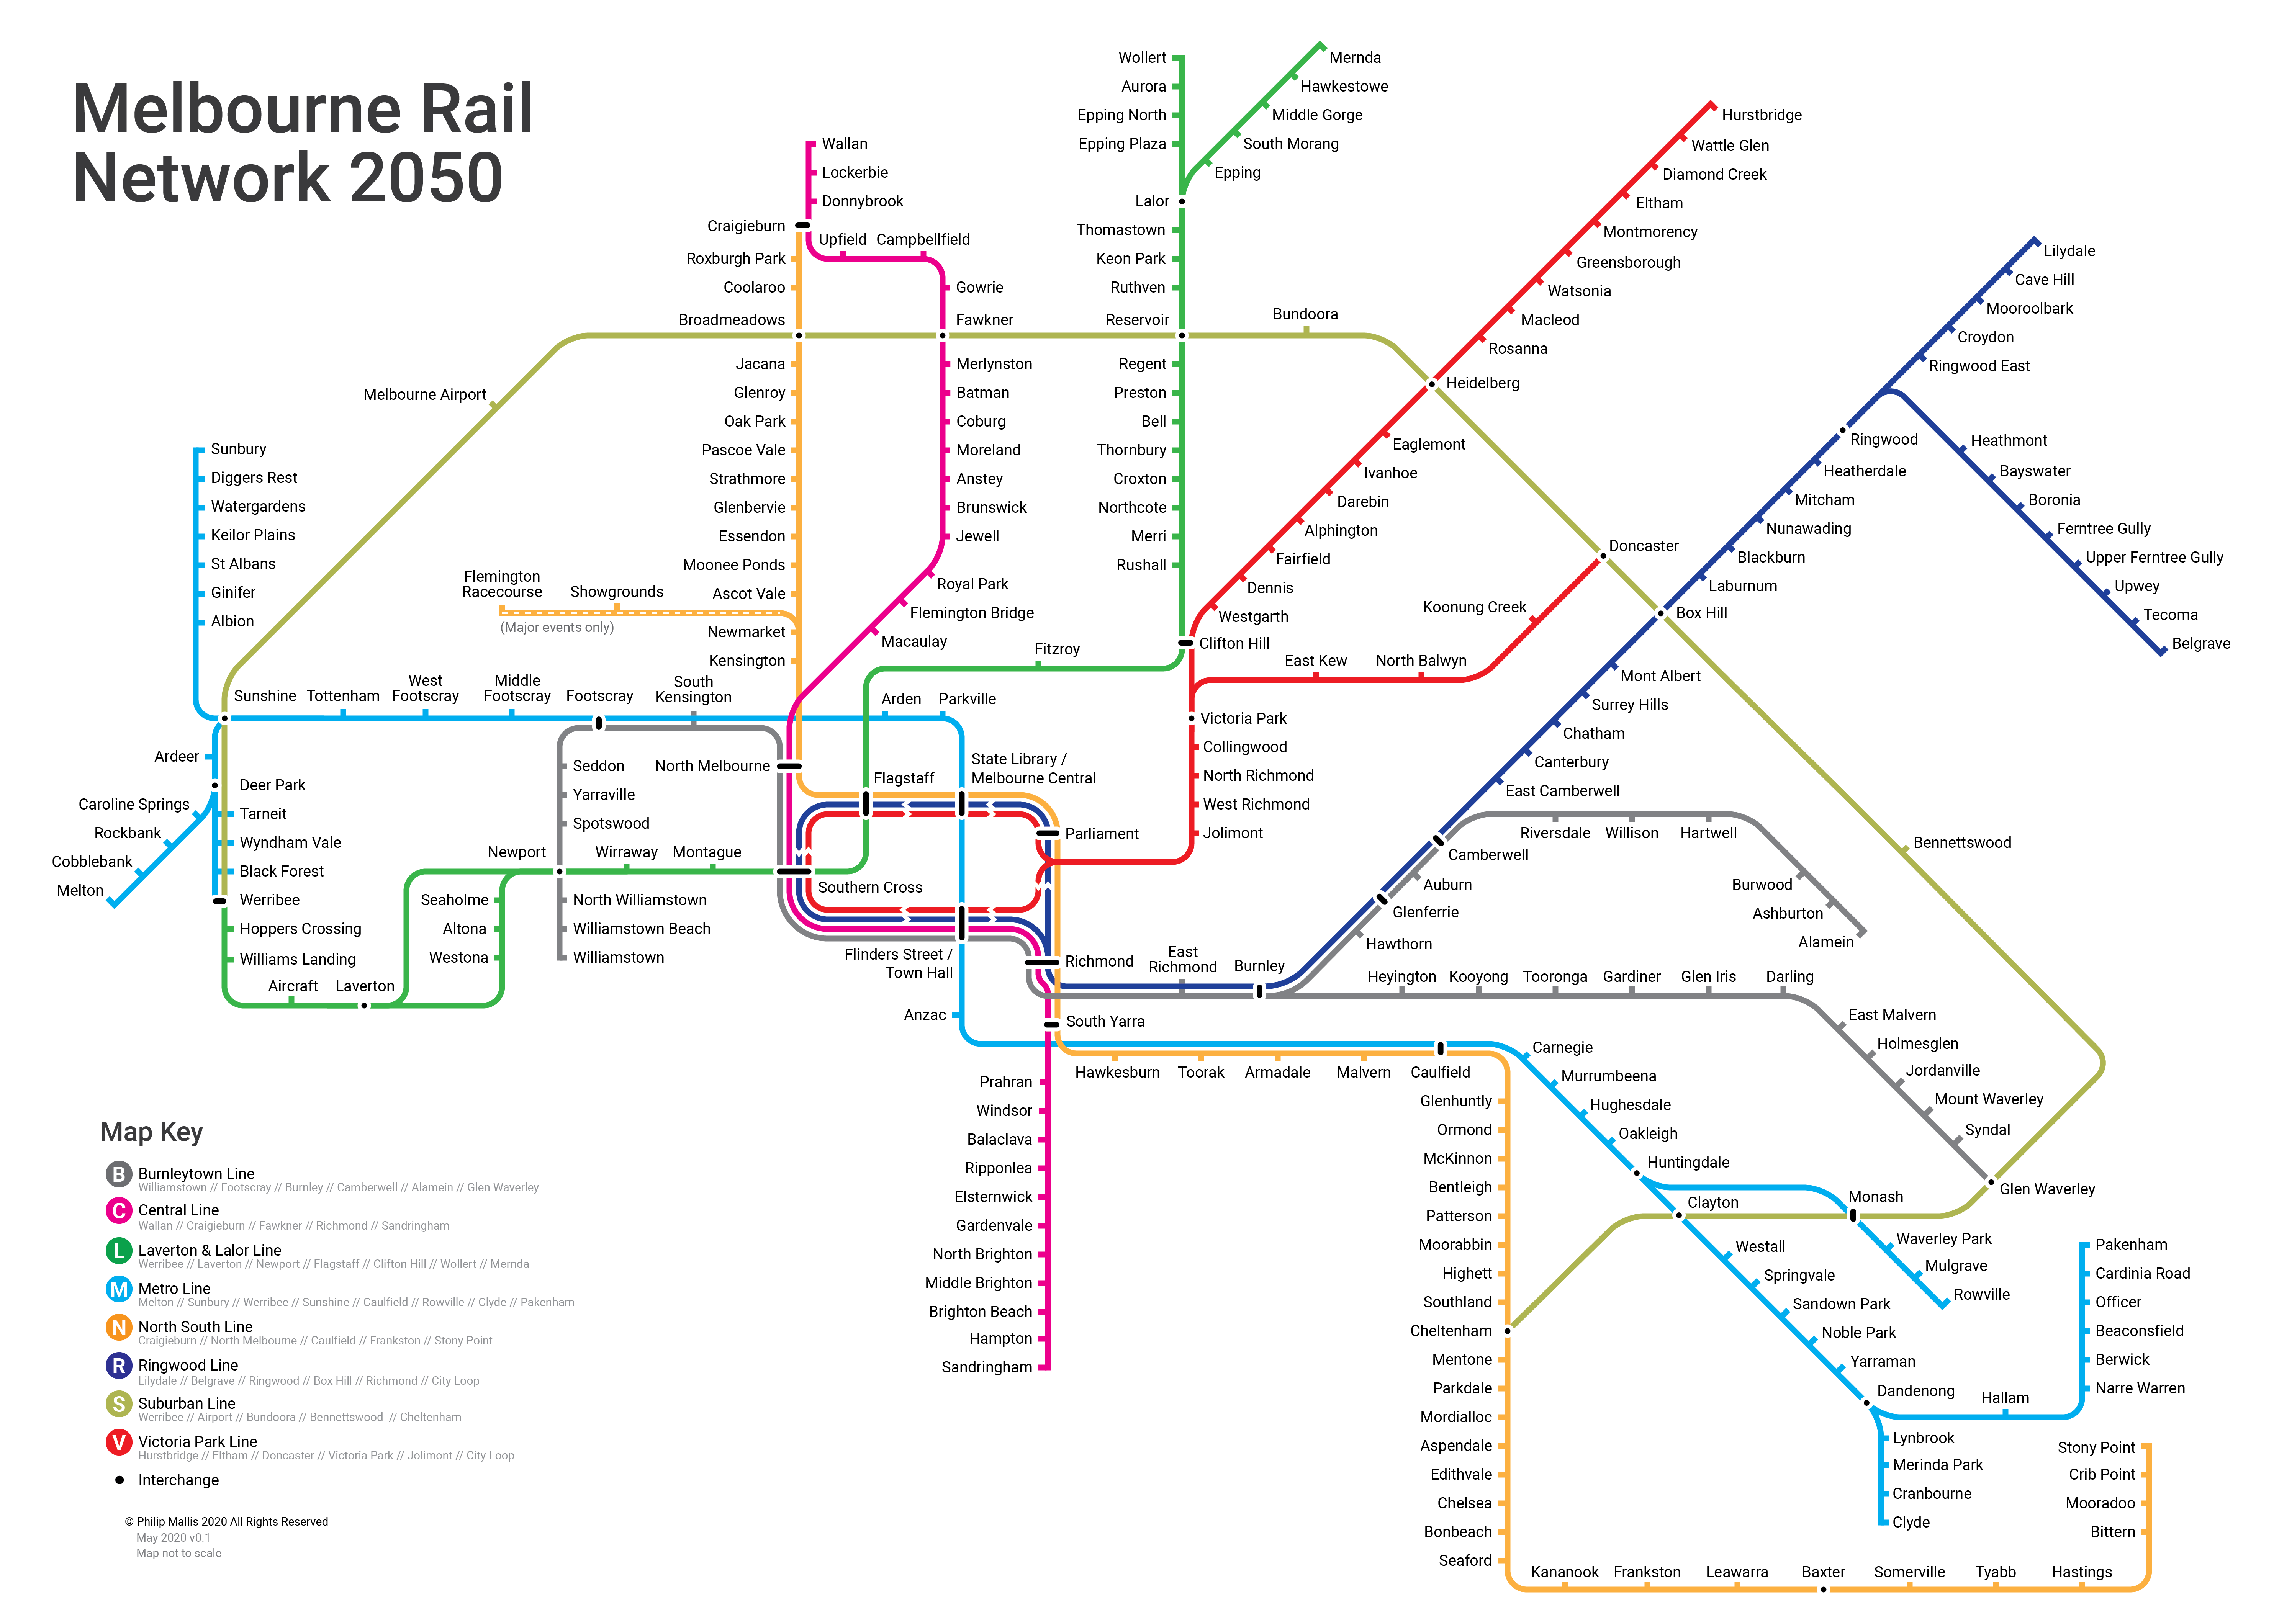 Melbourne rail network 2050 | Maps by Philip Mallis